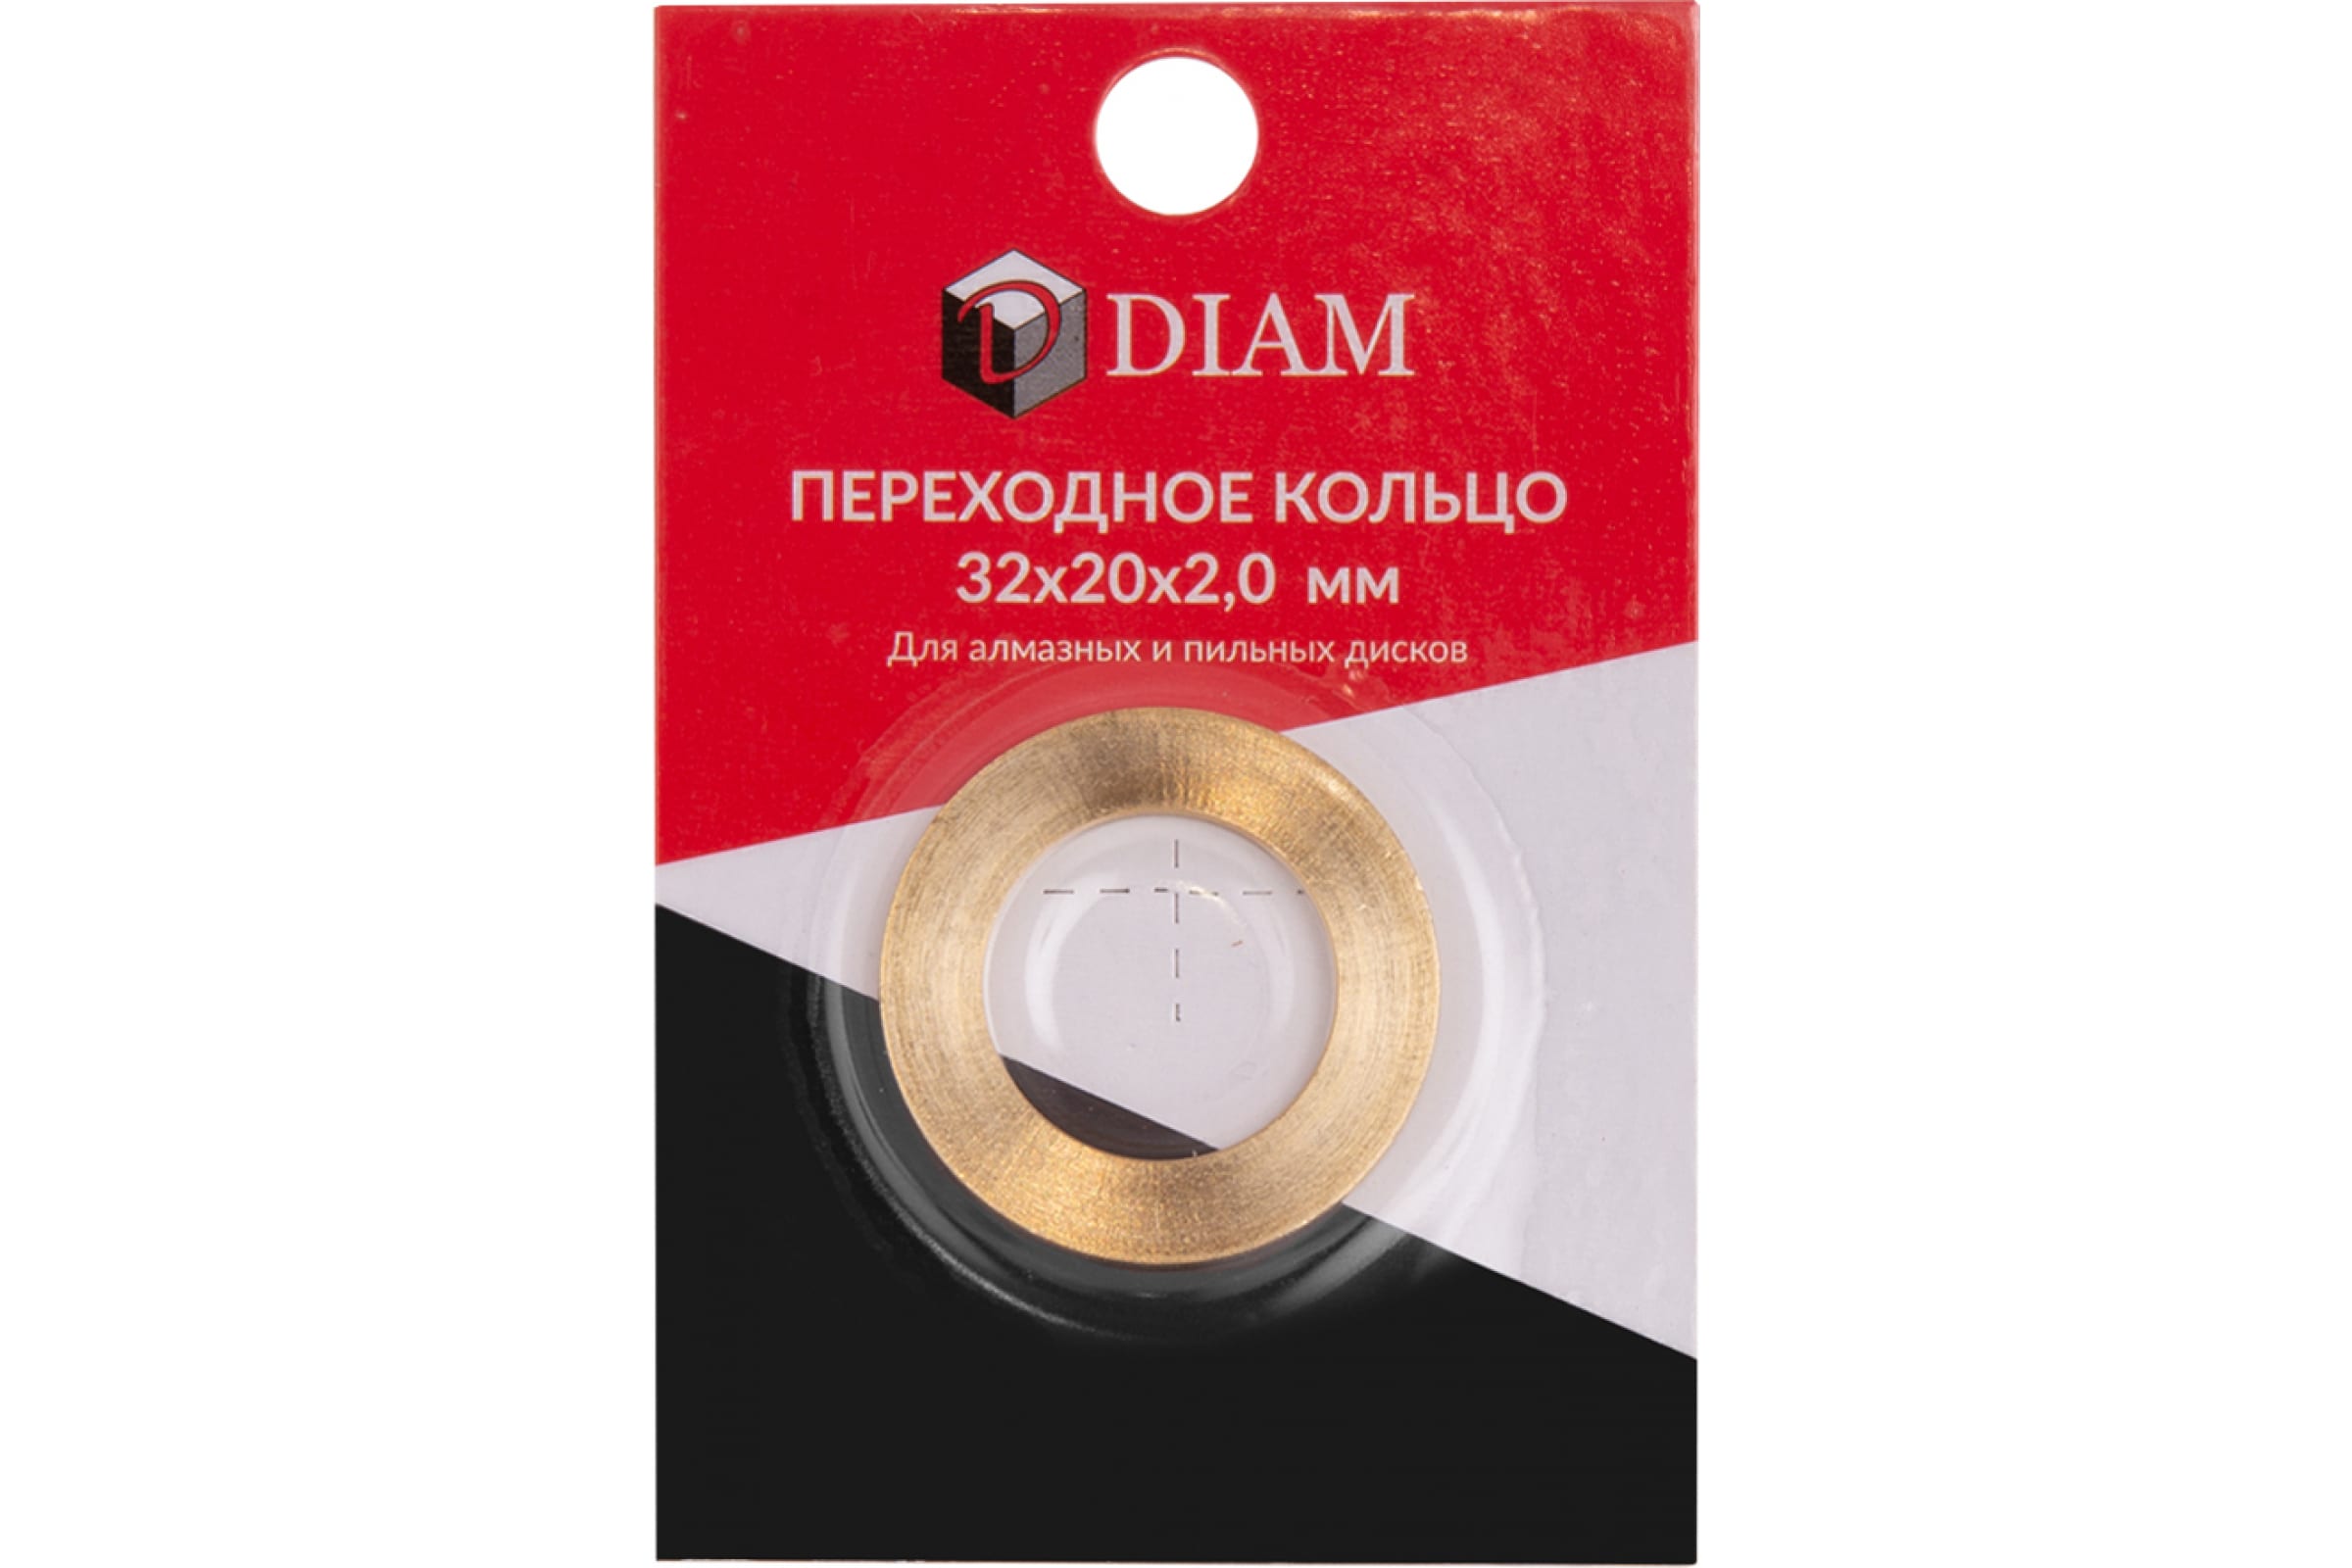 DIAM Переходное кольцо 32х20х2,0 640085